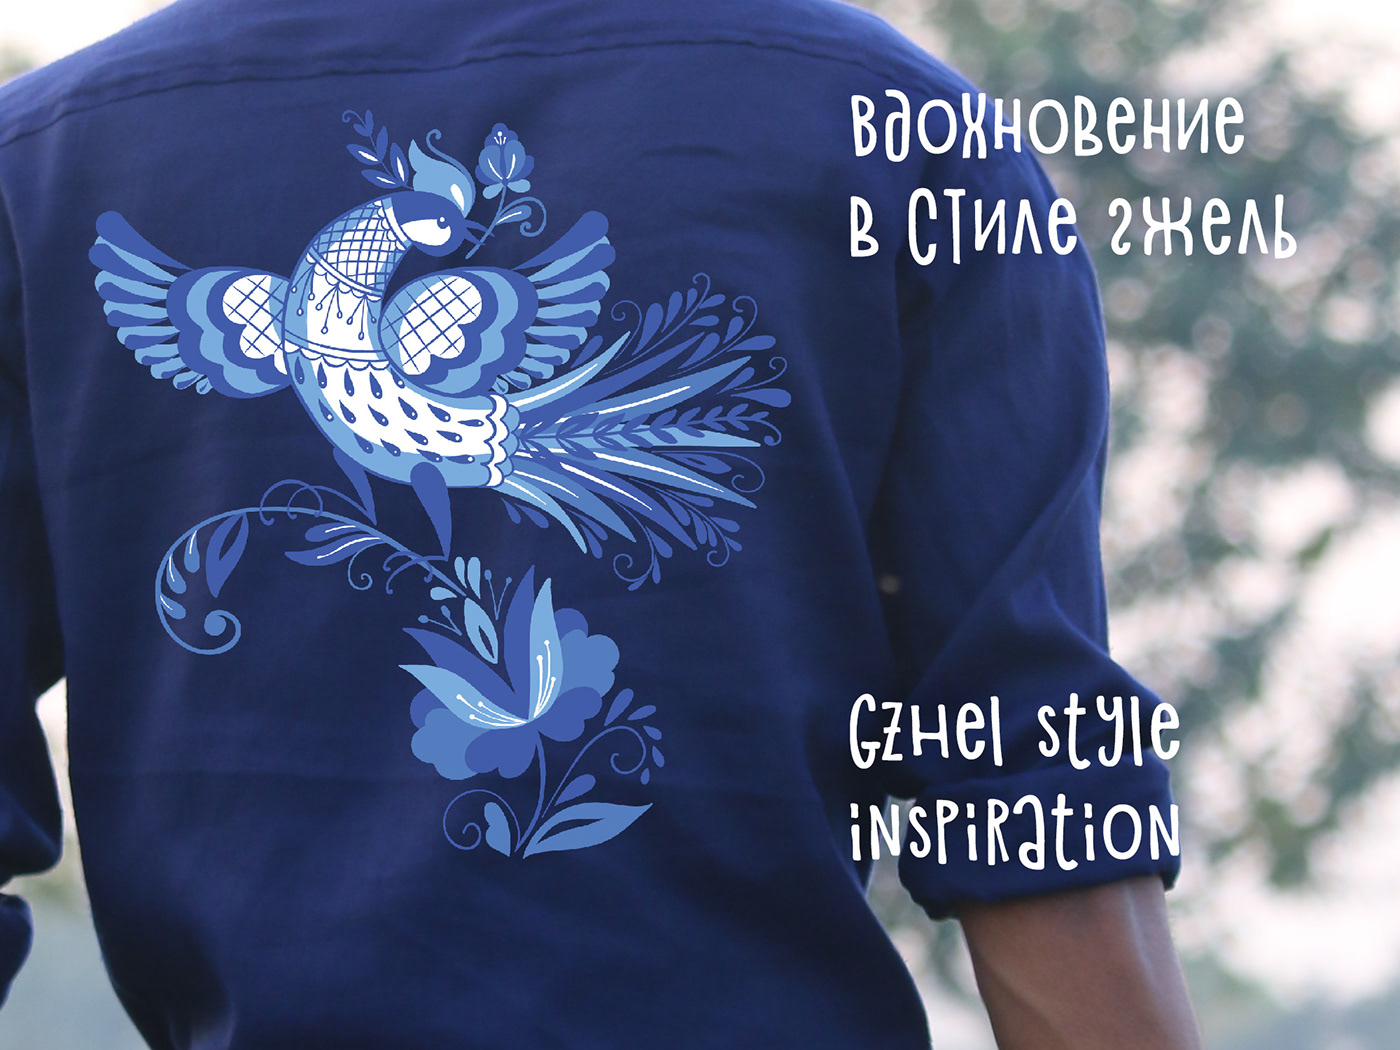 Blue prints in Gzhel style. Bird, wreath.